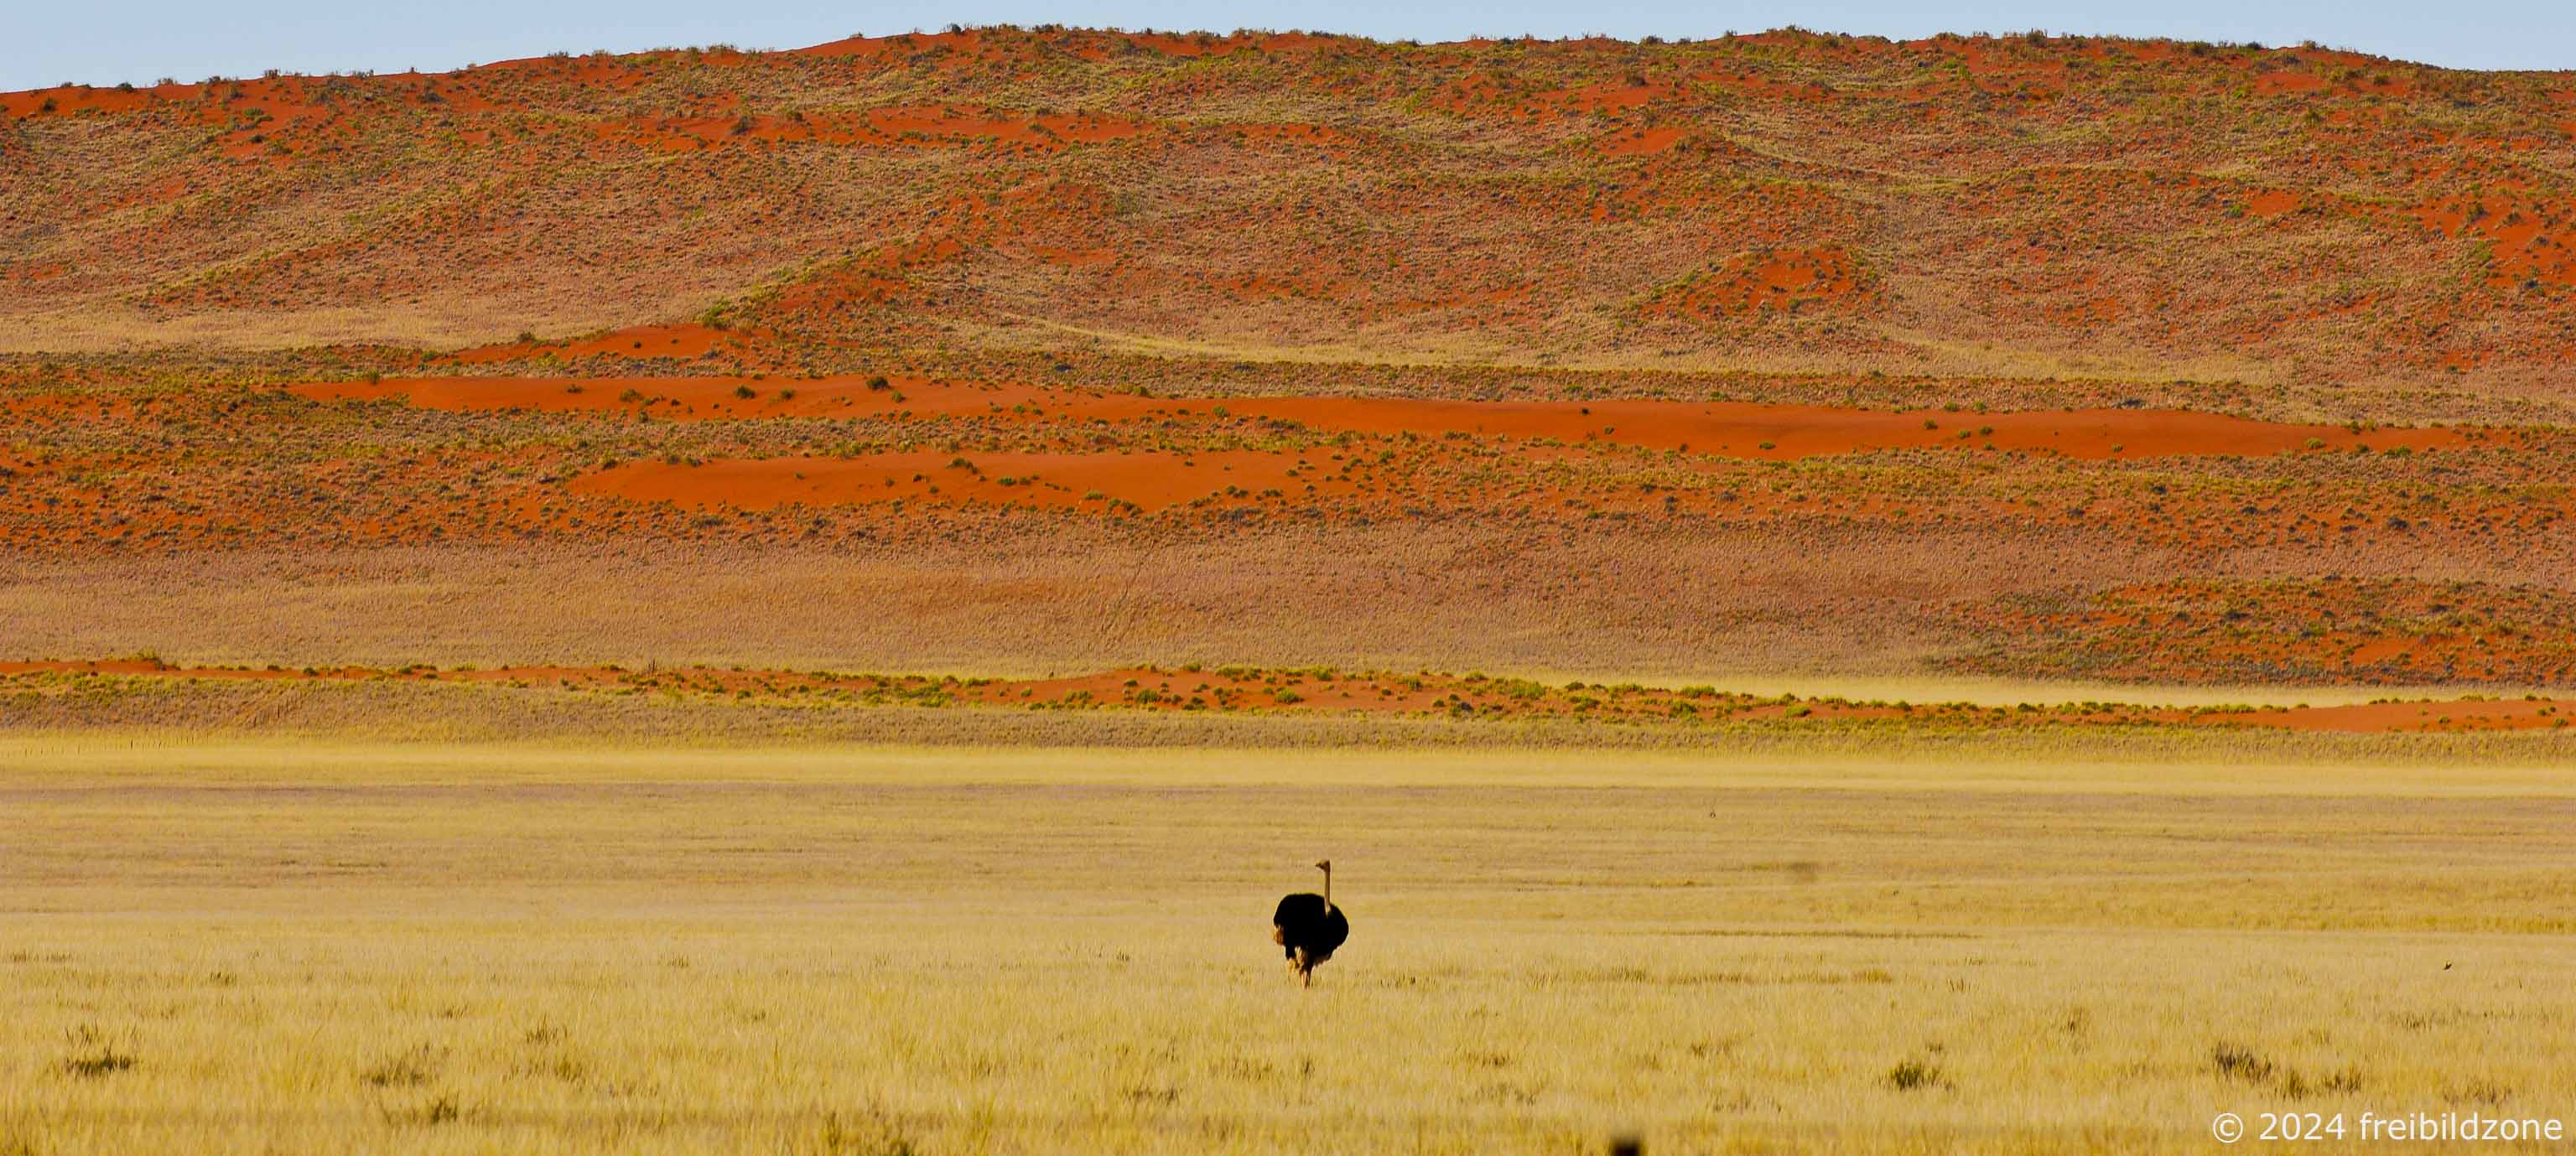 Kalahari, Namibia